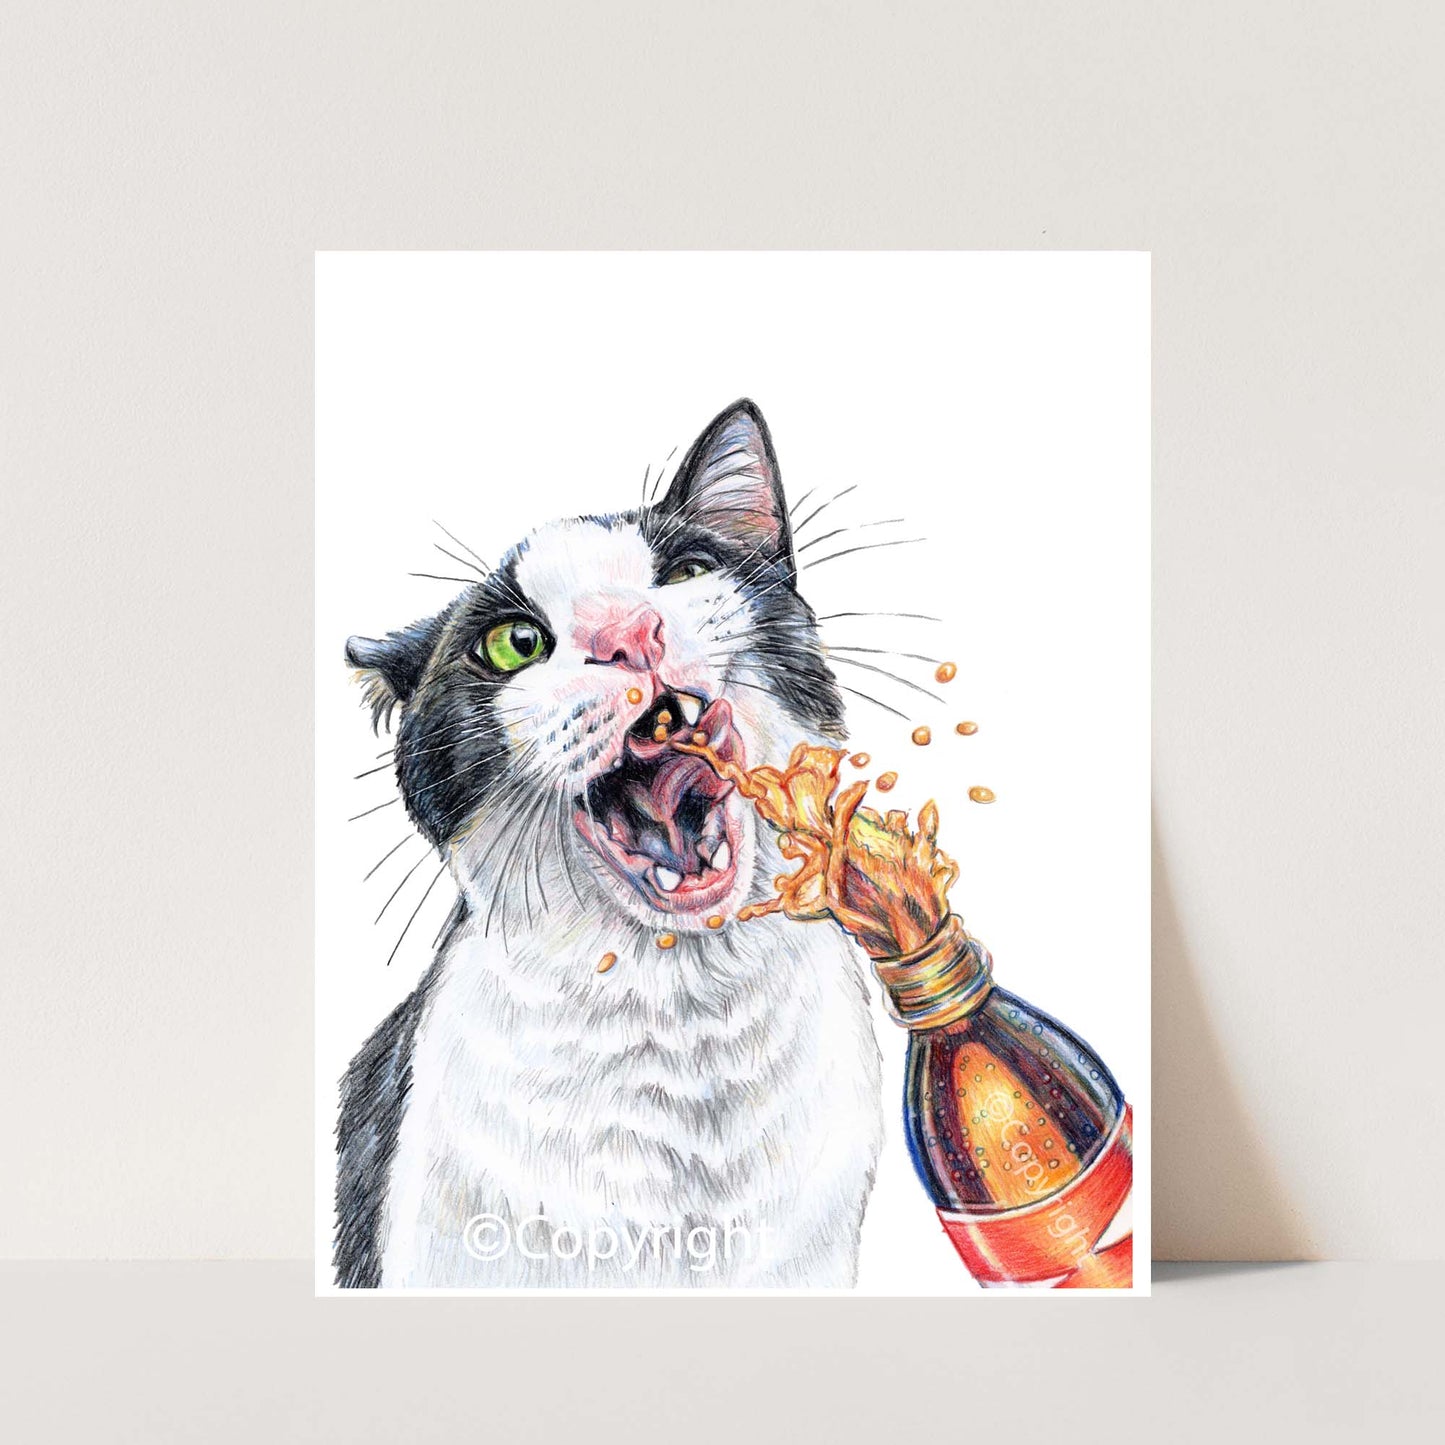 Coloured pencil drawing of a tuxedo cat drinking from a spraying bottle of soda pop. Art by Deidre Wicks